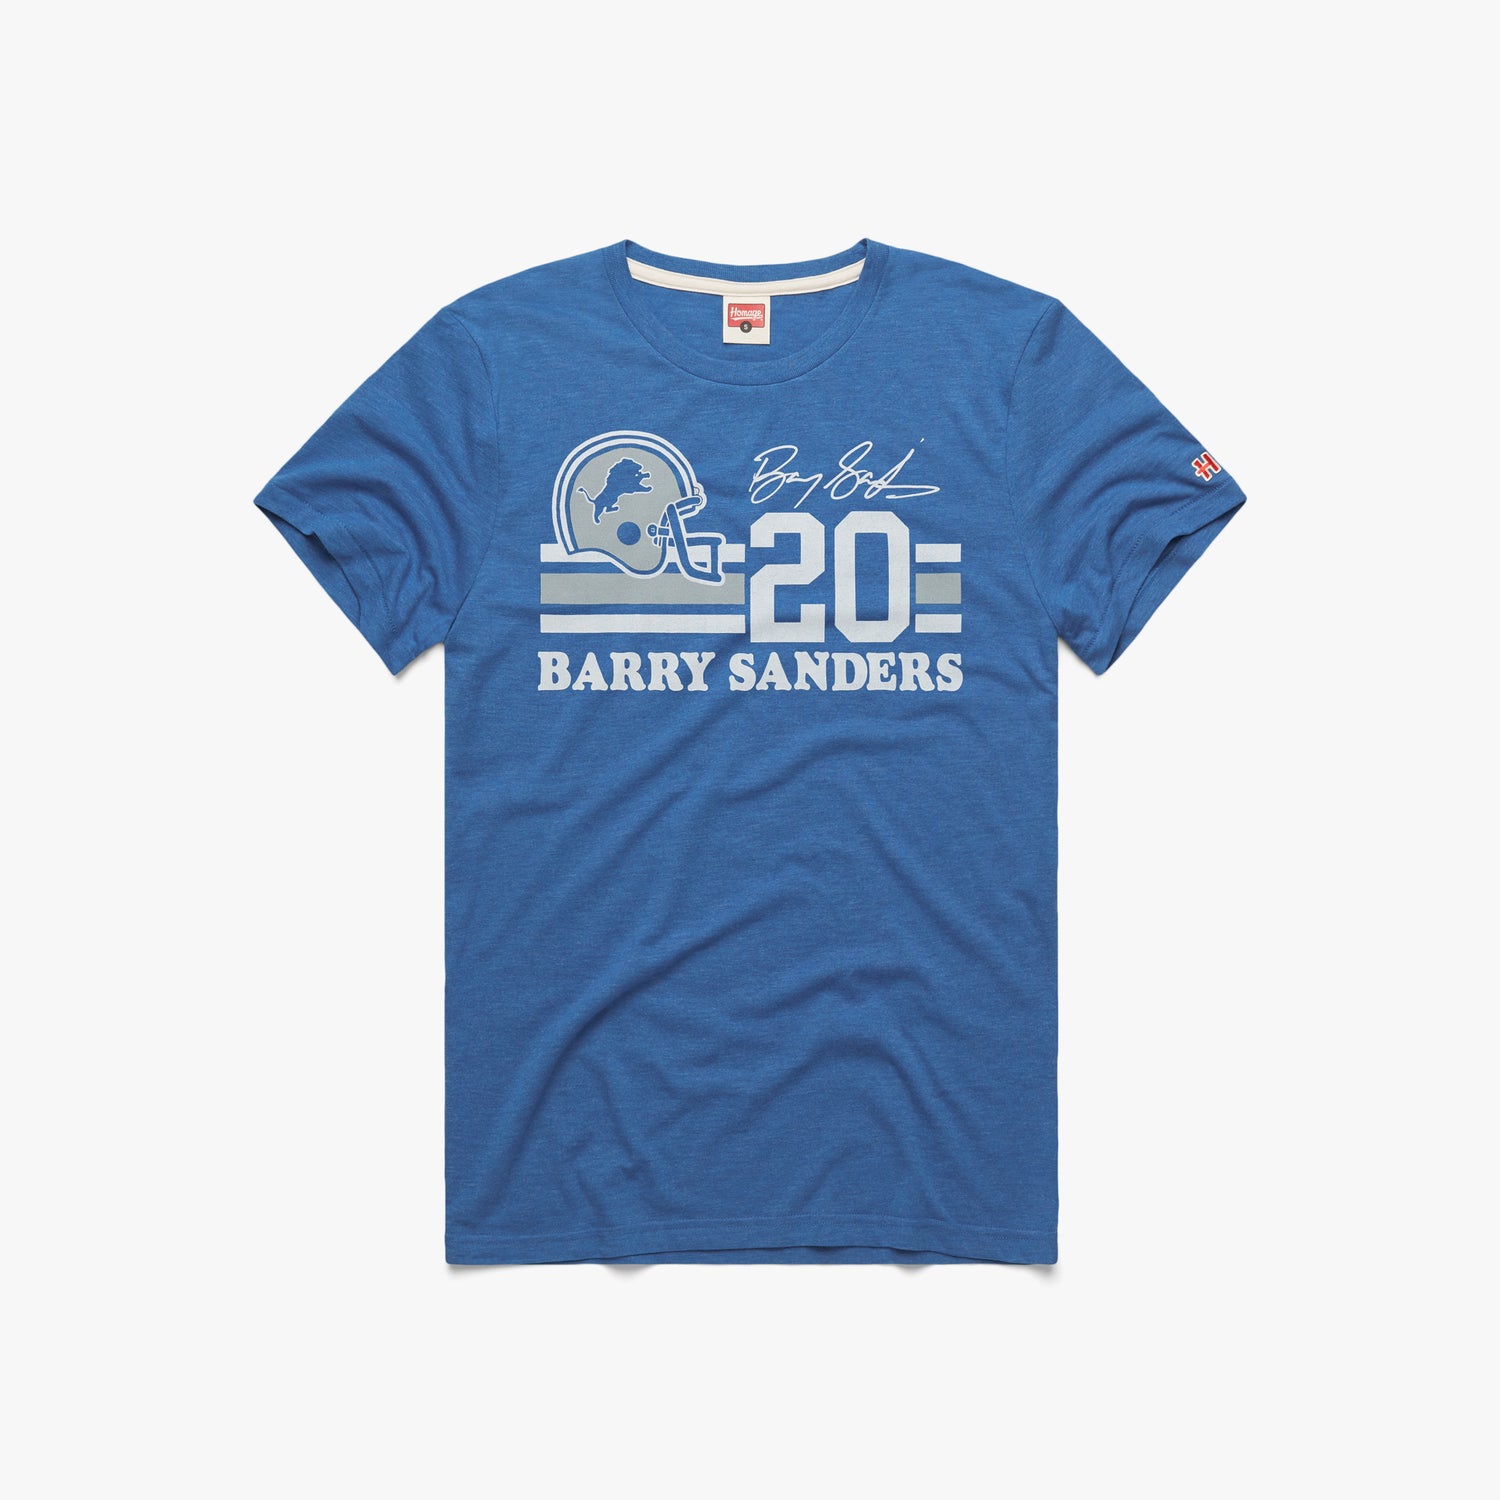 barry sanders t shirt